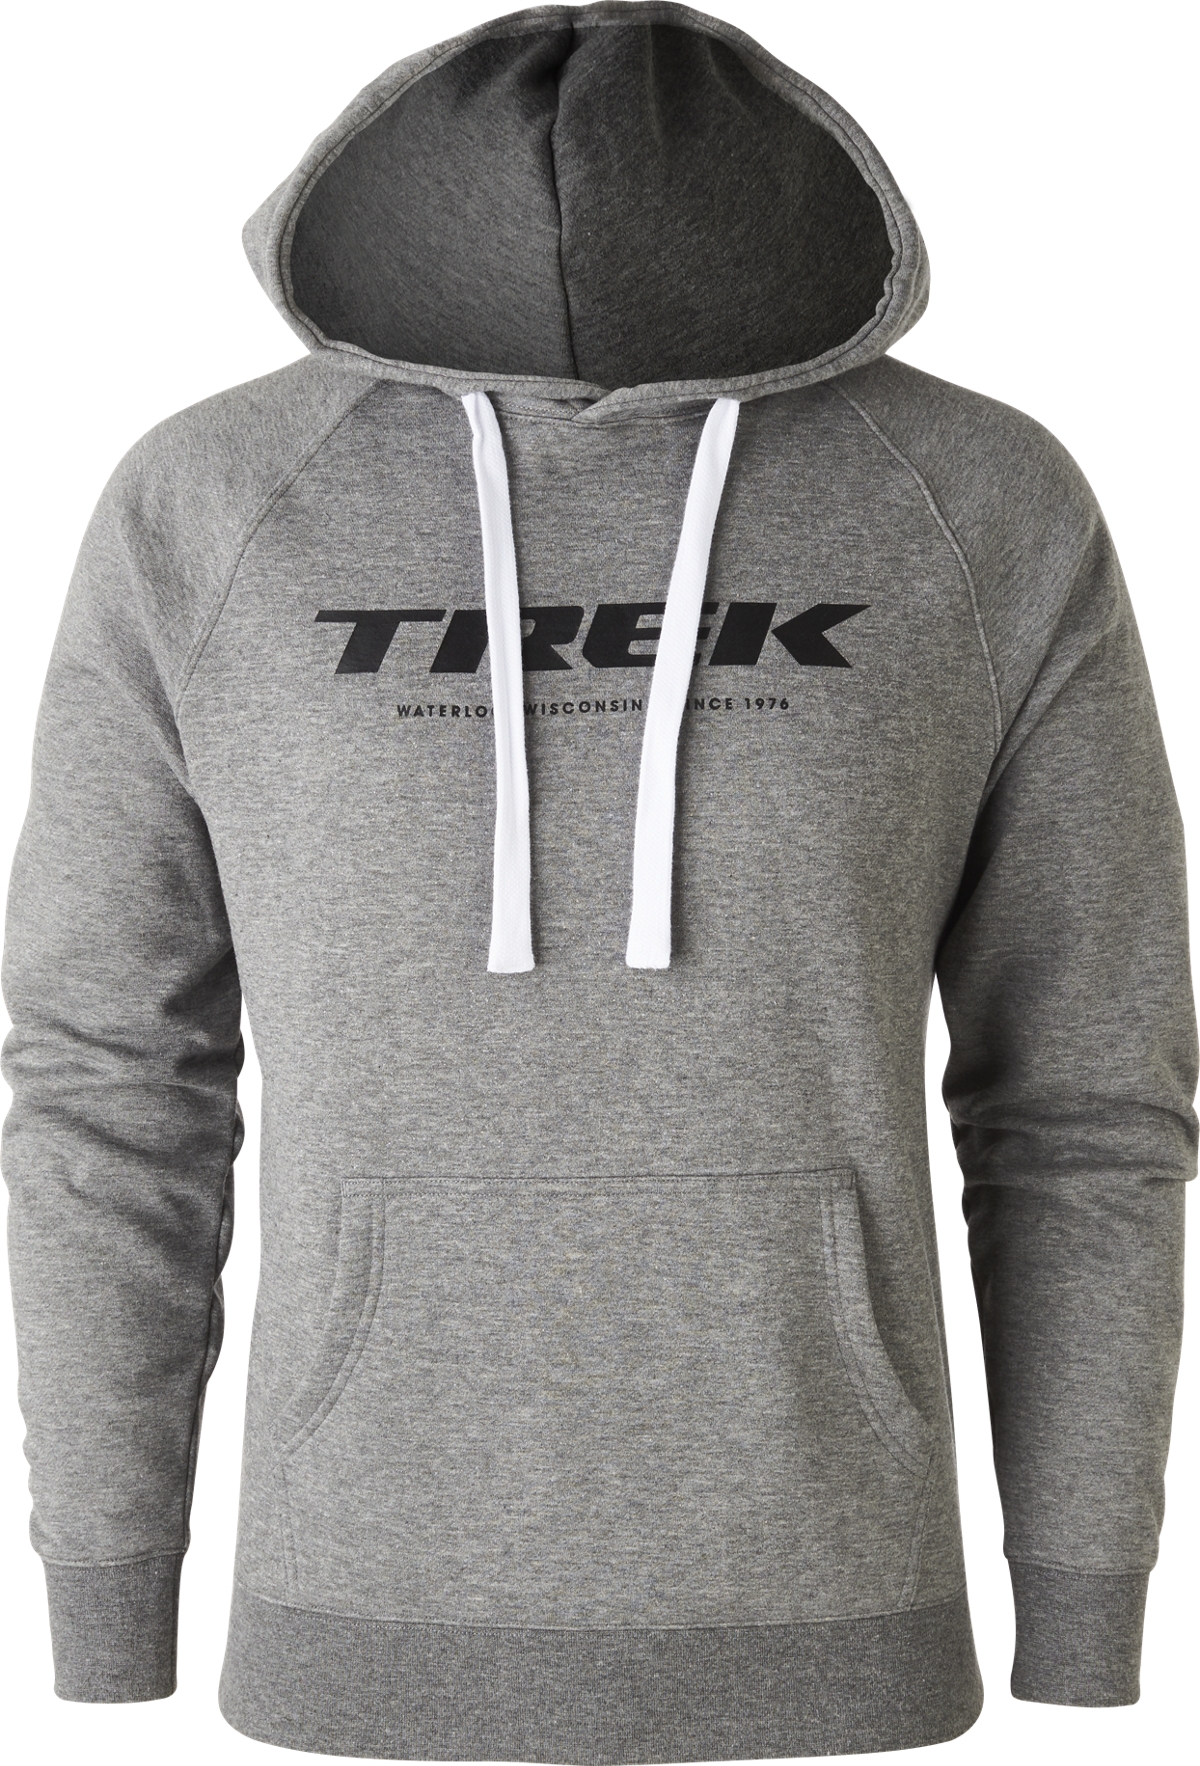 trek clothing brand